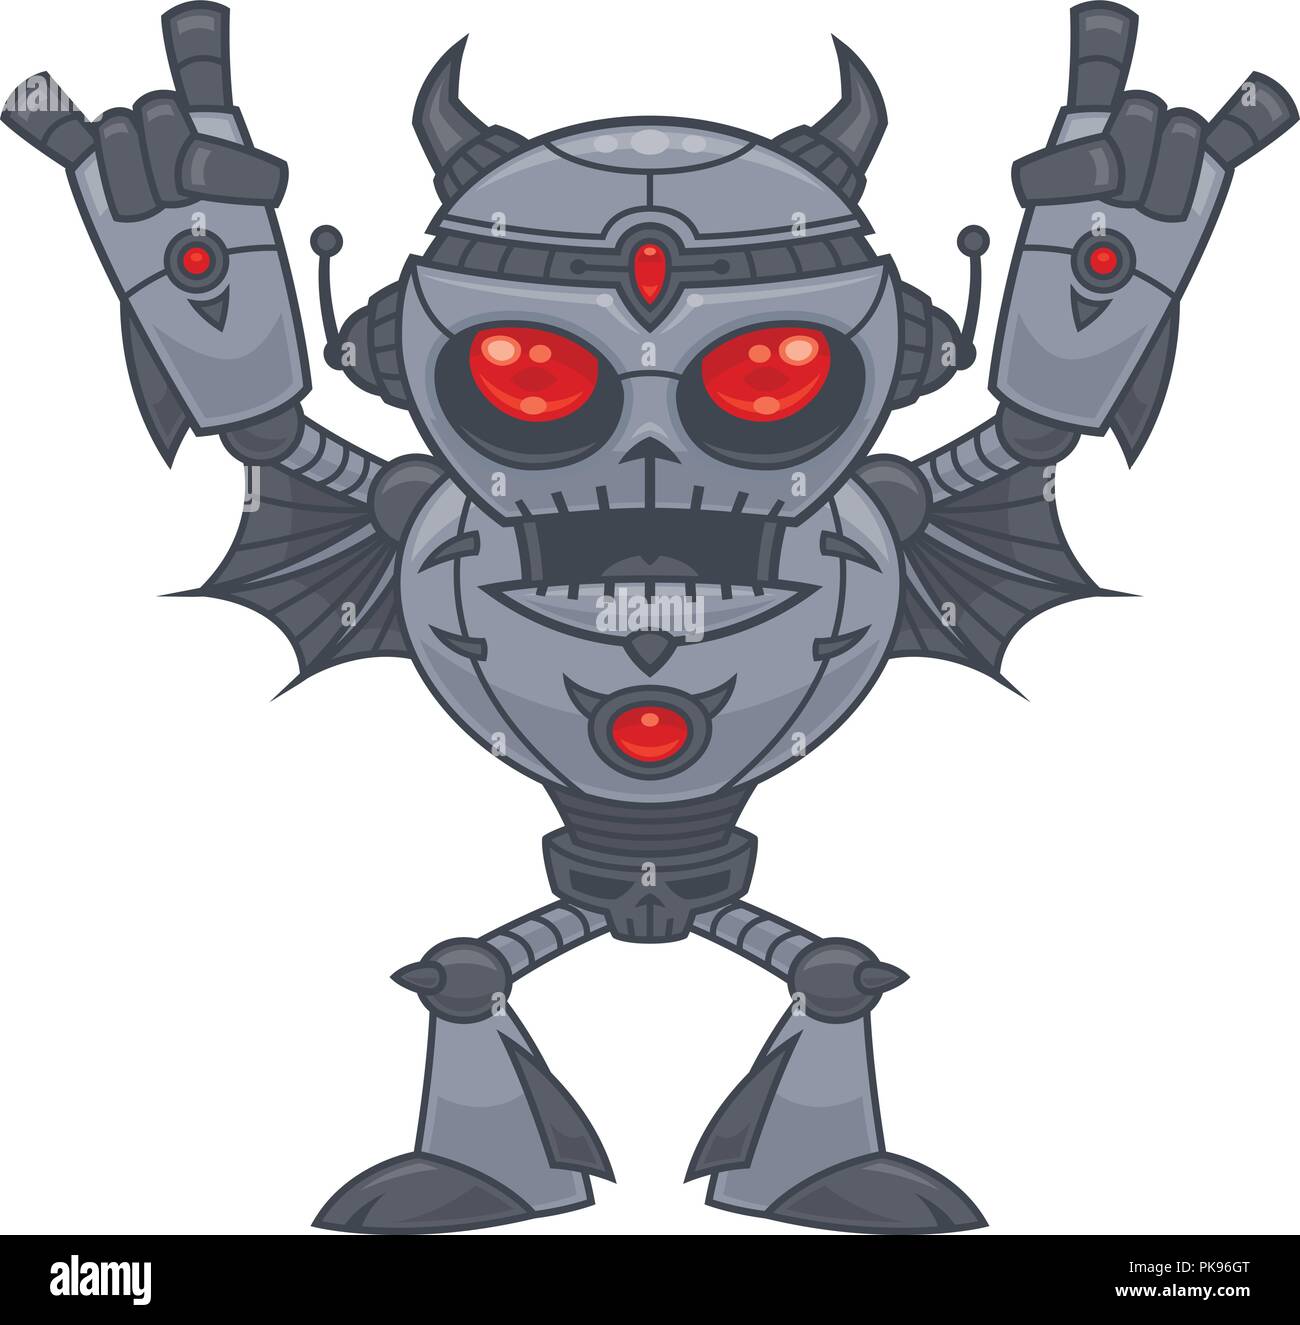 Metalhead - Heavy Metal Roboter. Vektor Cartoon Illustration eines roten Augen heavy metal liebenden Roboter mit Devil horn Gesten der Hand. Stock Vektor